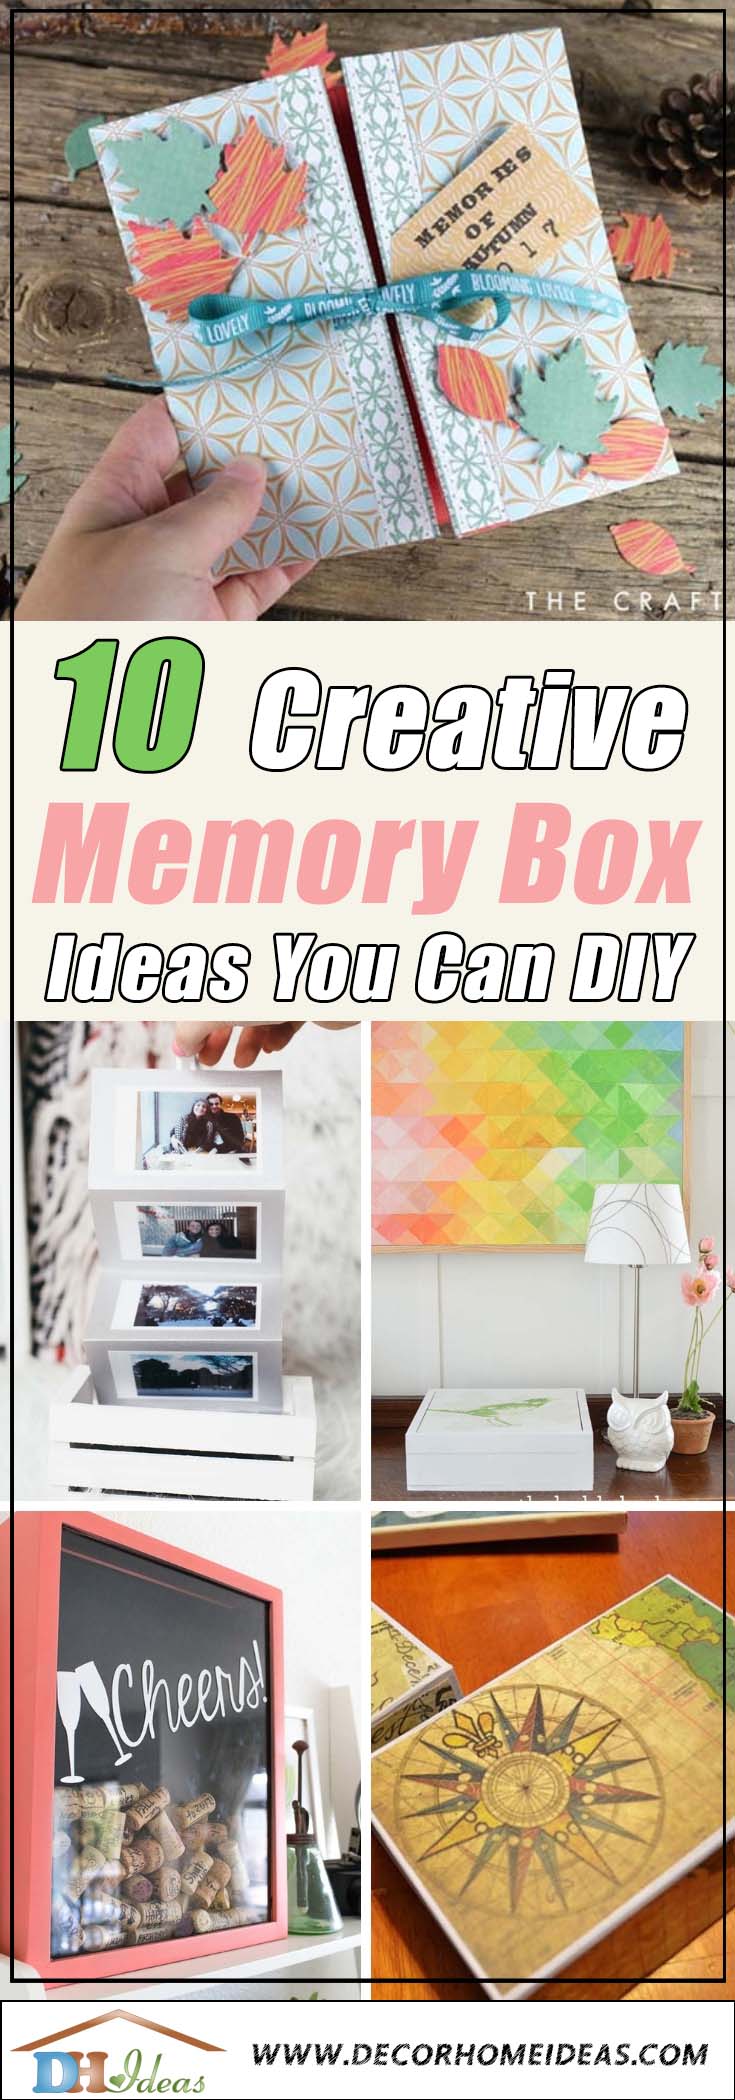 10 Creatıve DIY Memorƴ Box Ideas #memorƴbox #dıƴ #decorhomeideas